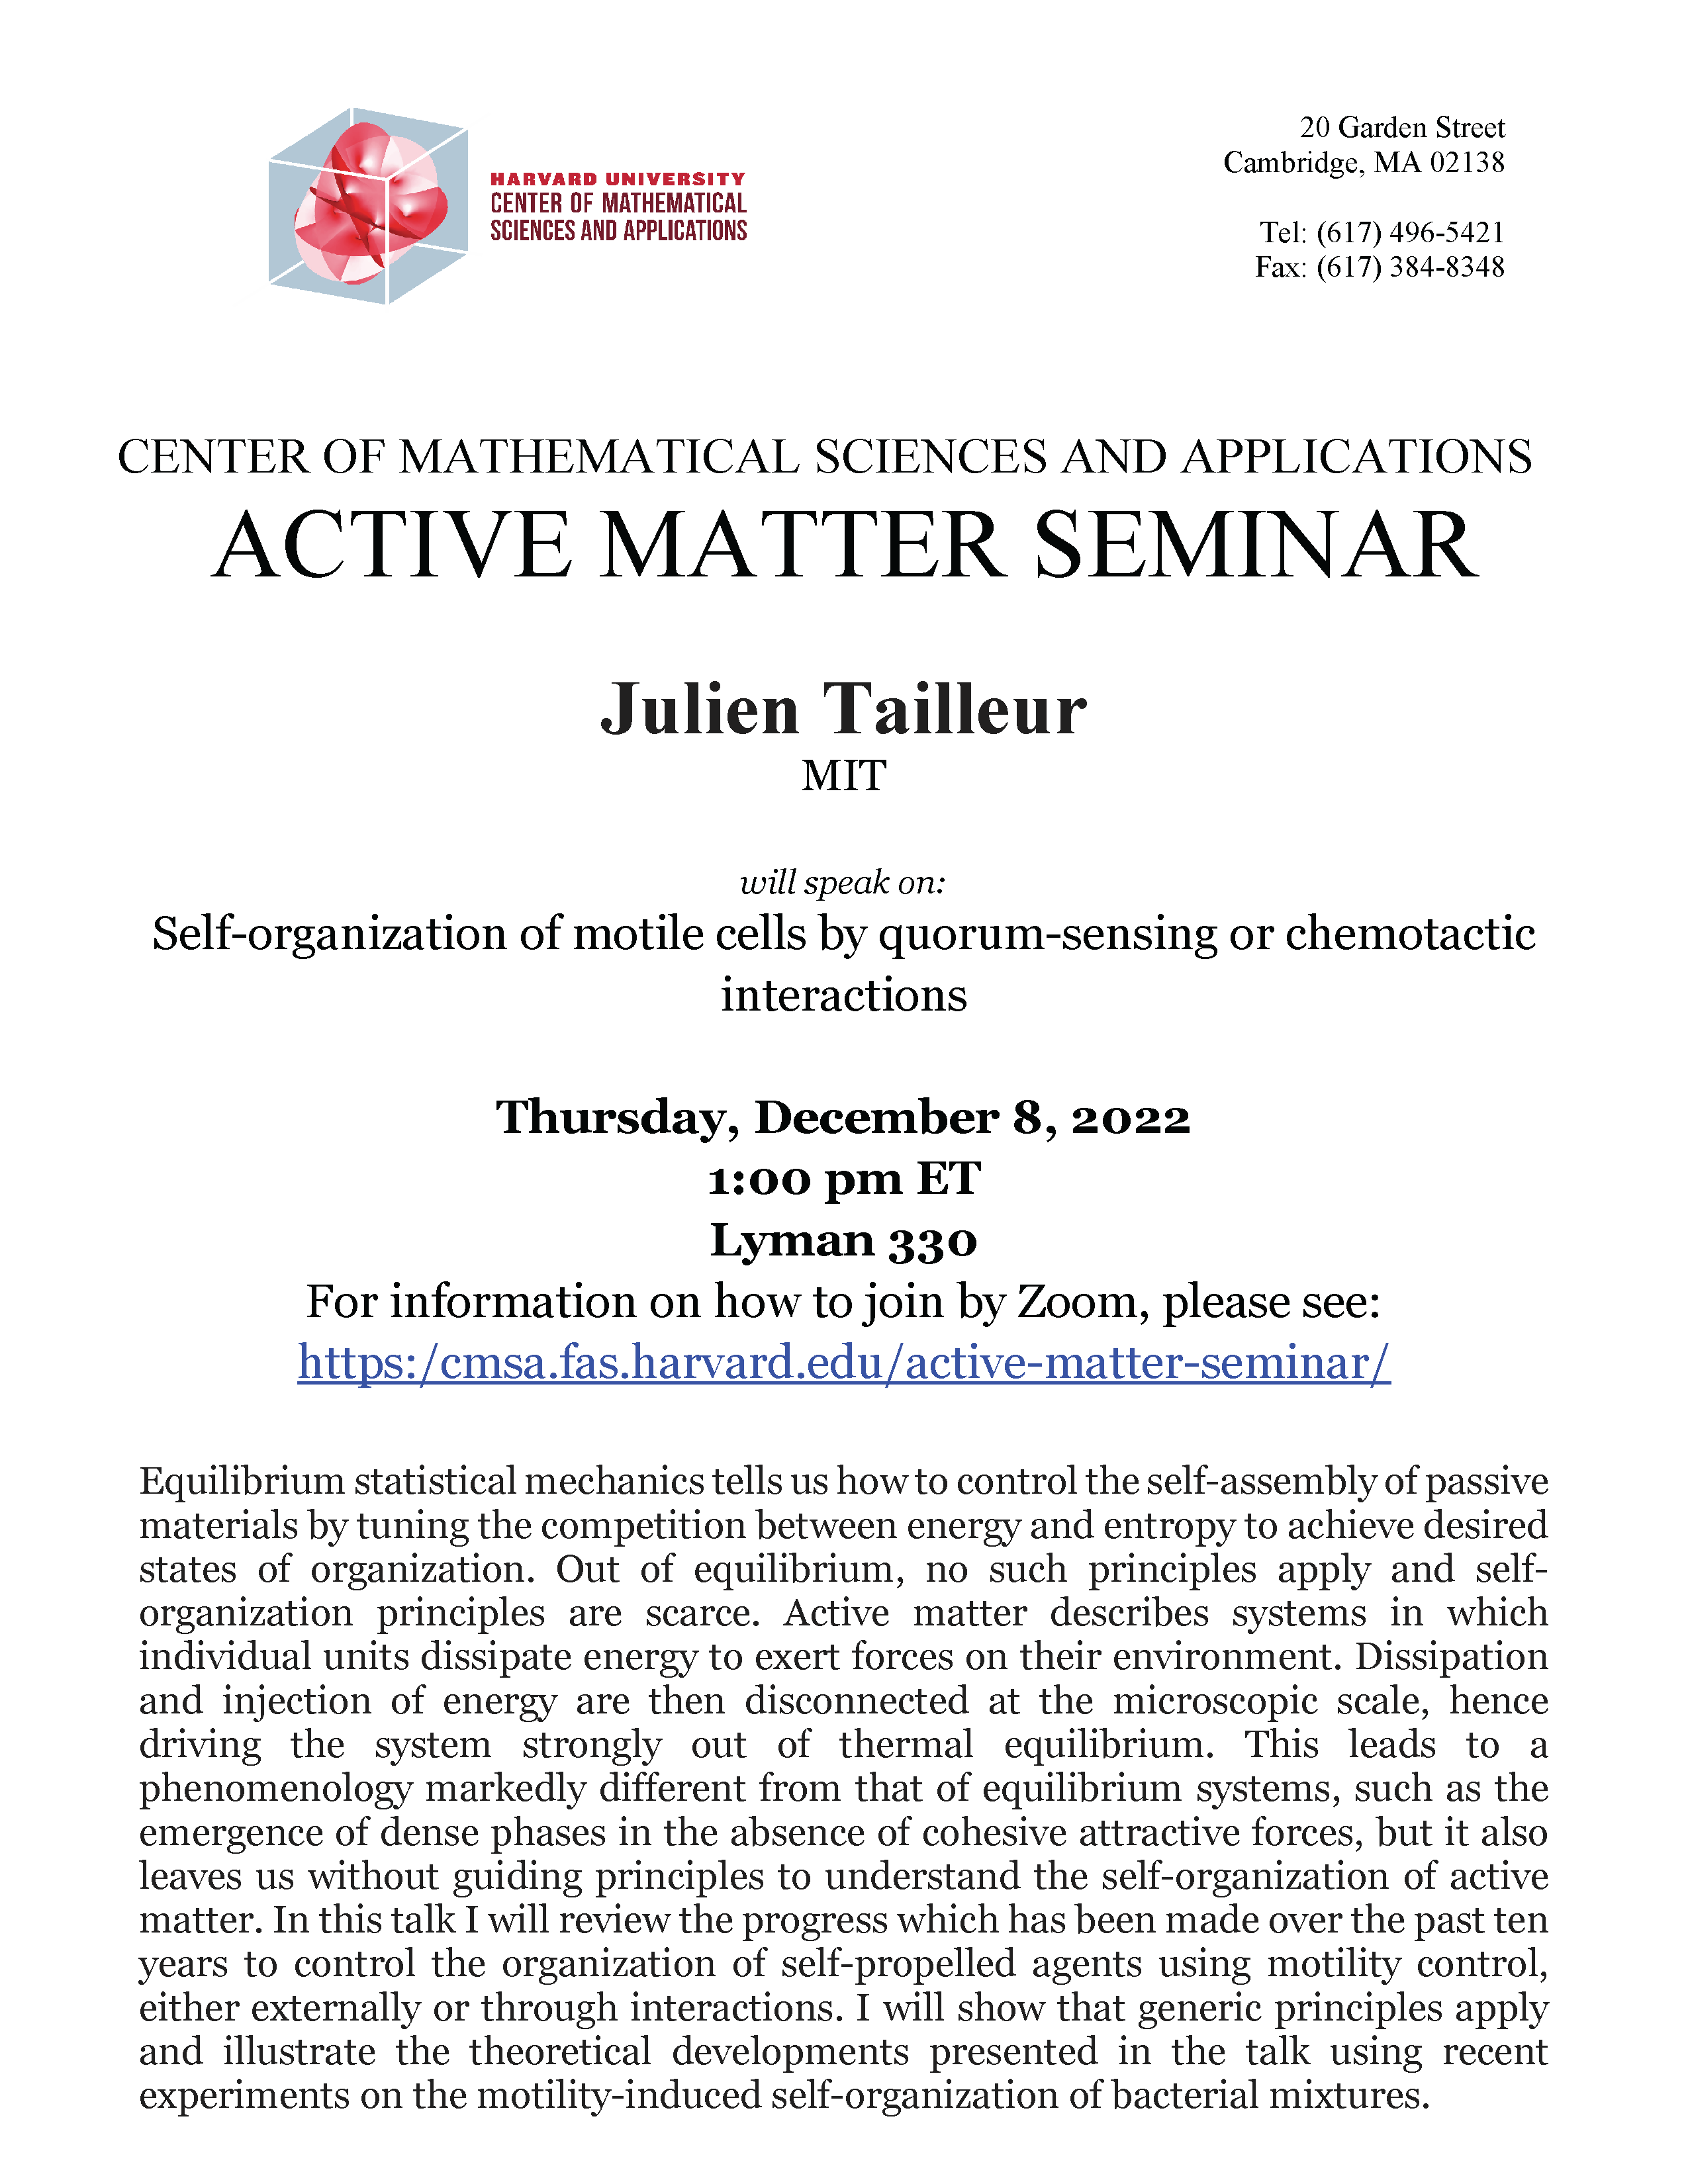 CMSA Active Matter Seminar 12.08.22